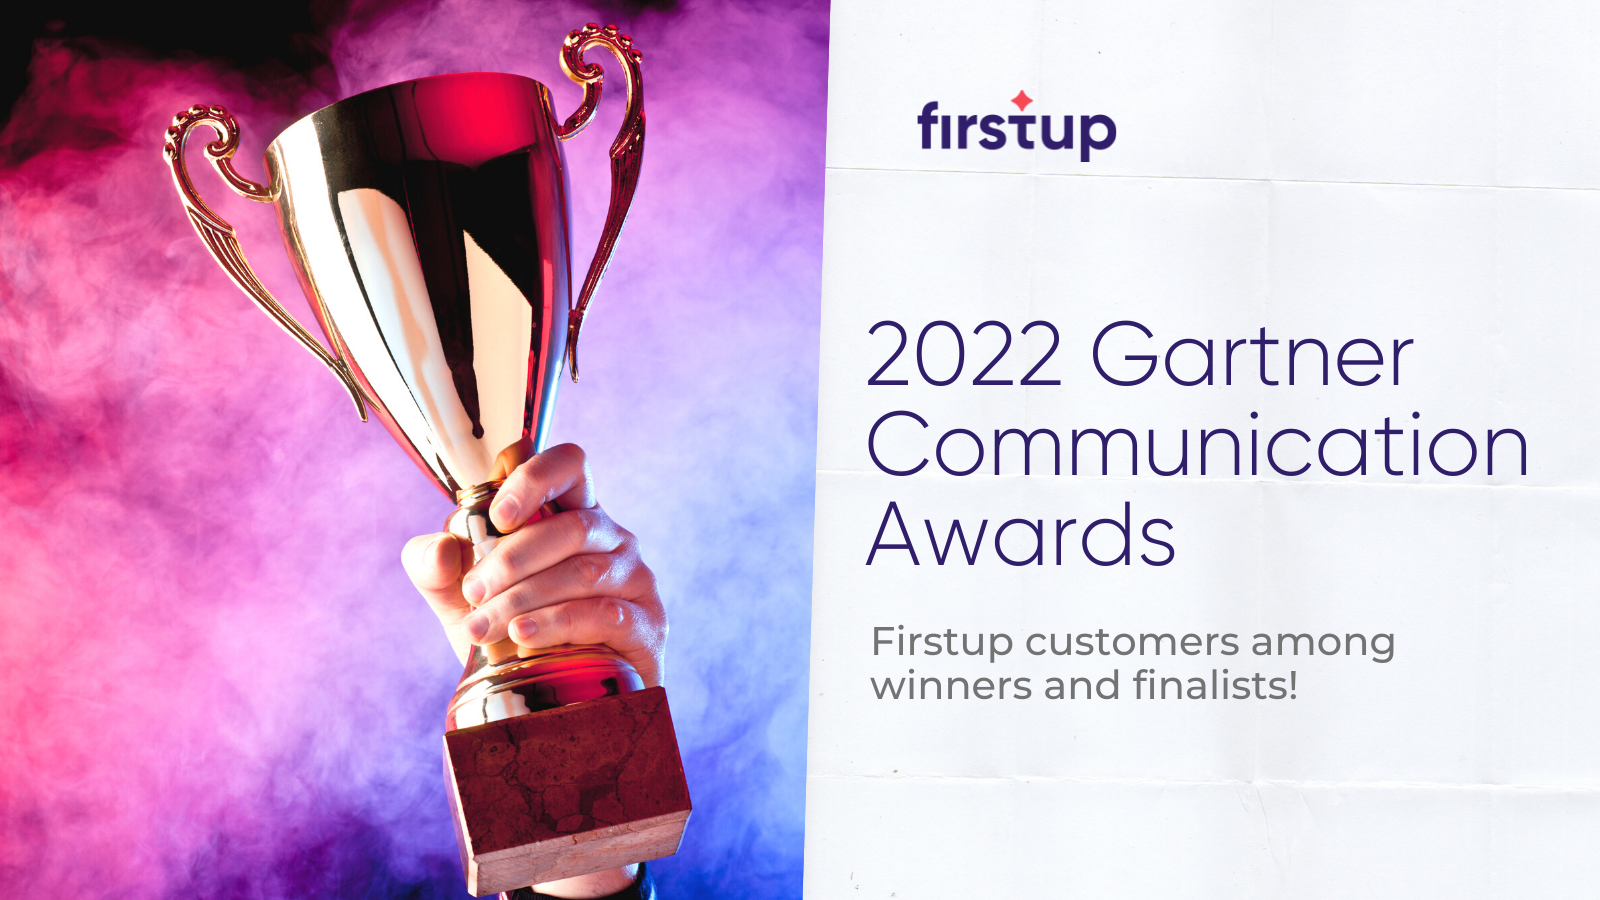 2022 Gartner Communication Awards winners and finalists announced